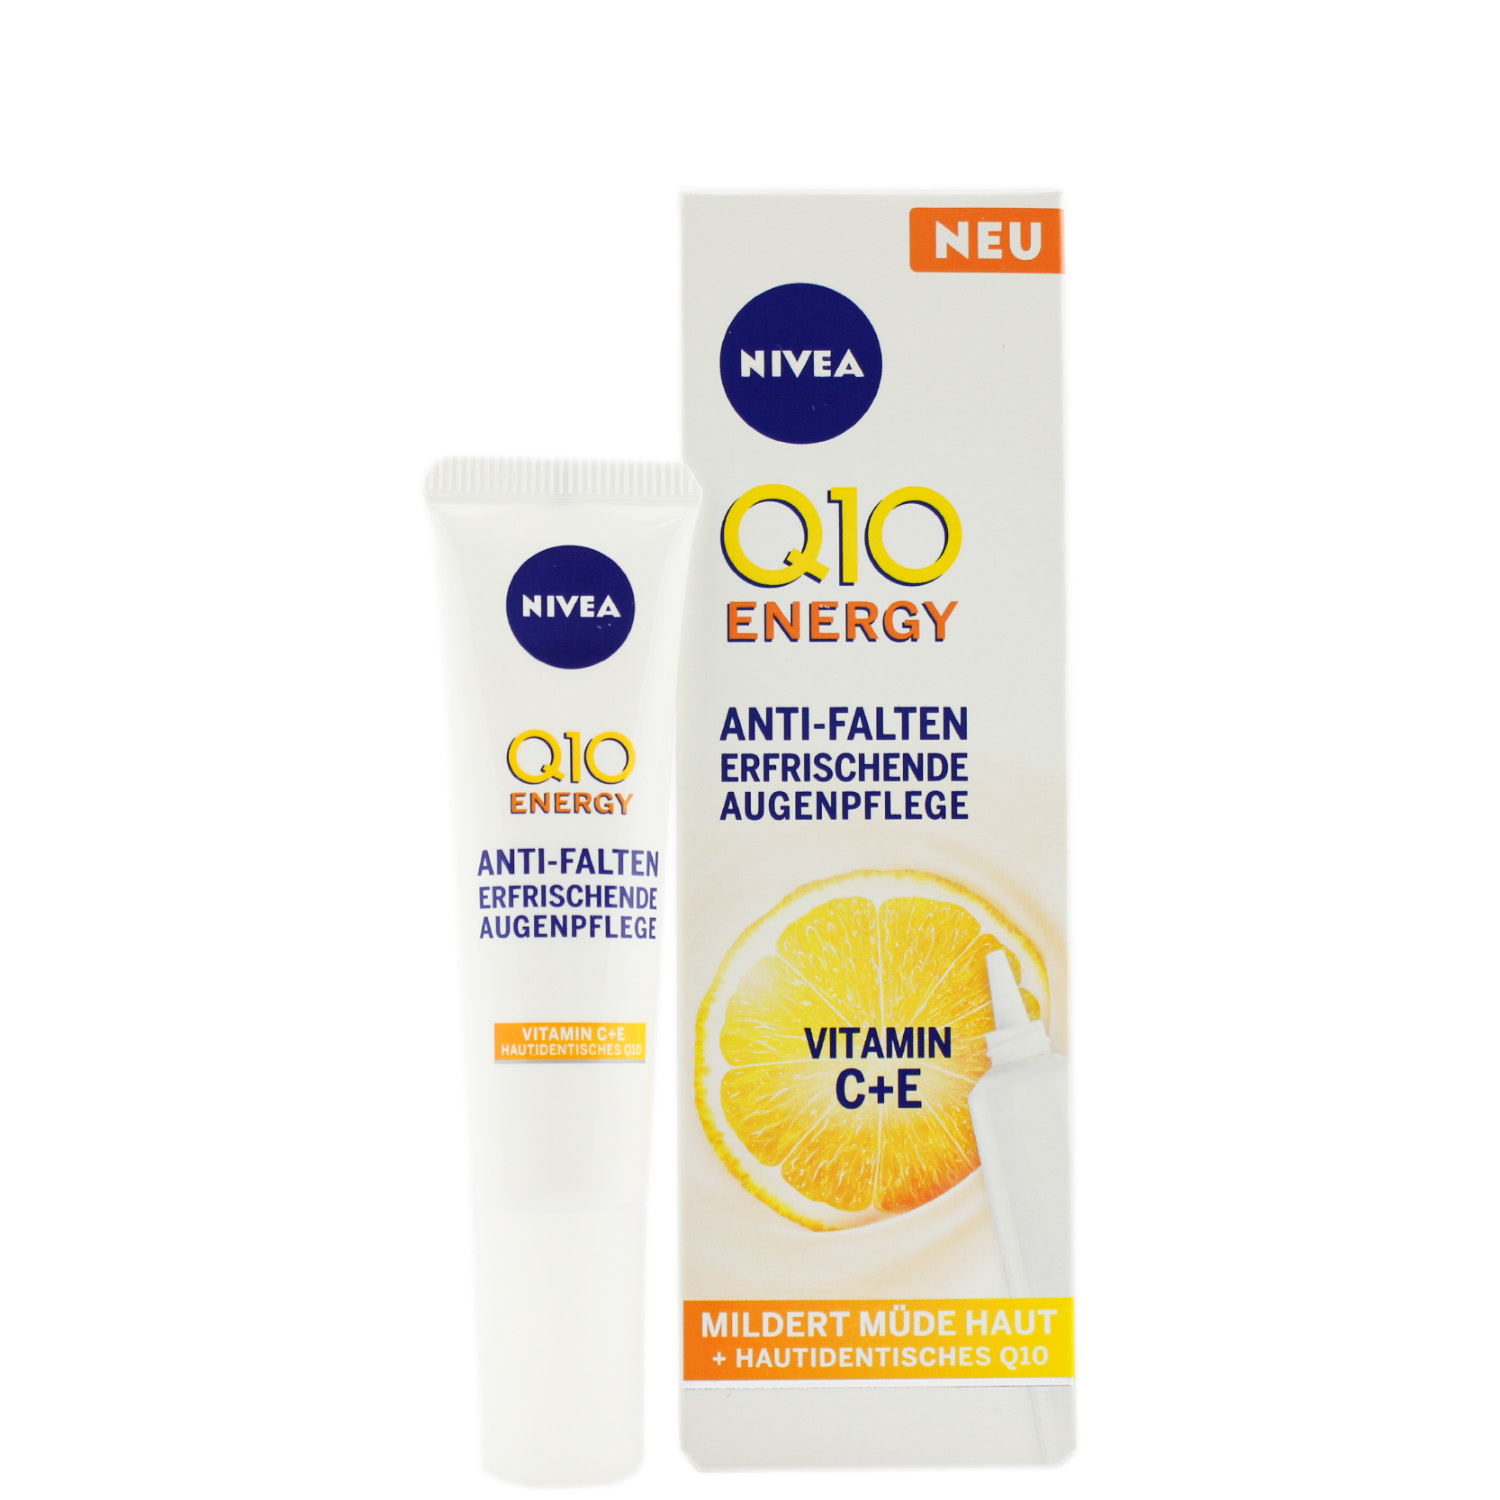 Nivea Q10 Energy Anti-Falten Erfrischende Augenpflege 15ml